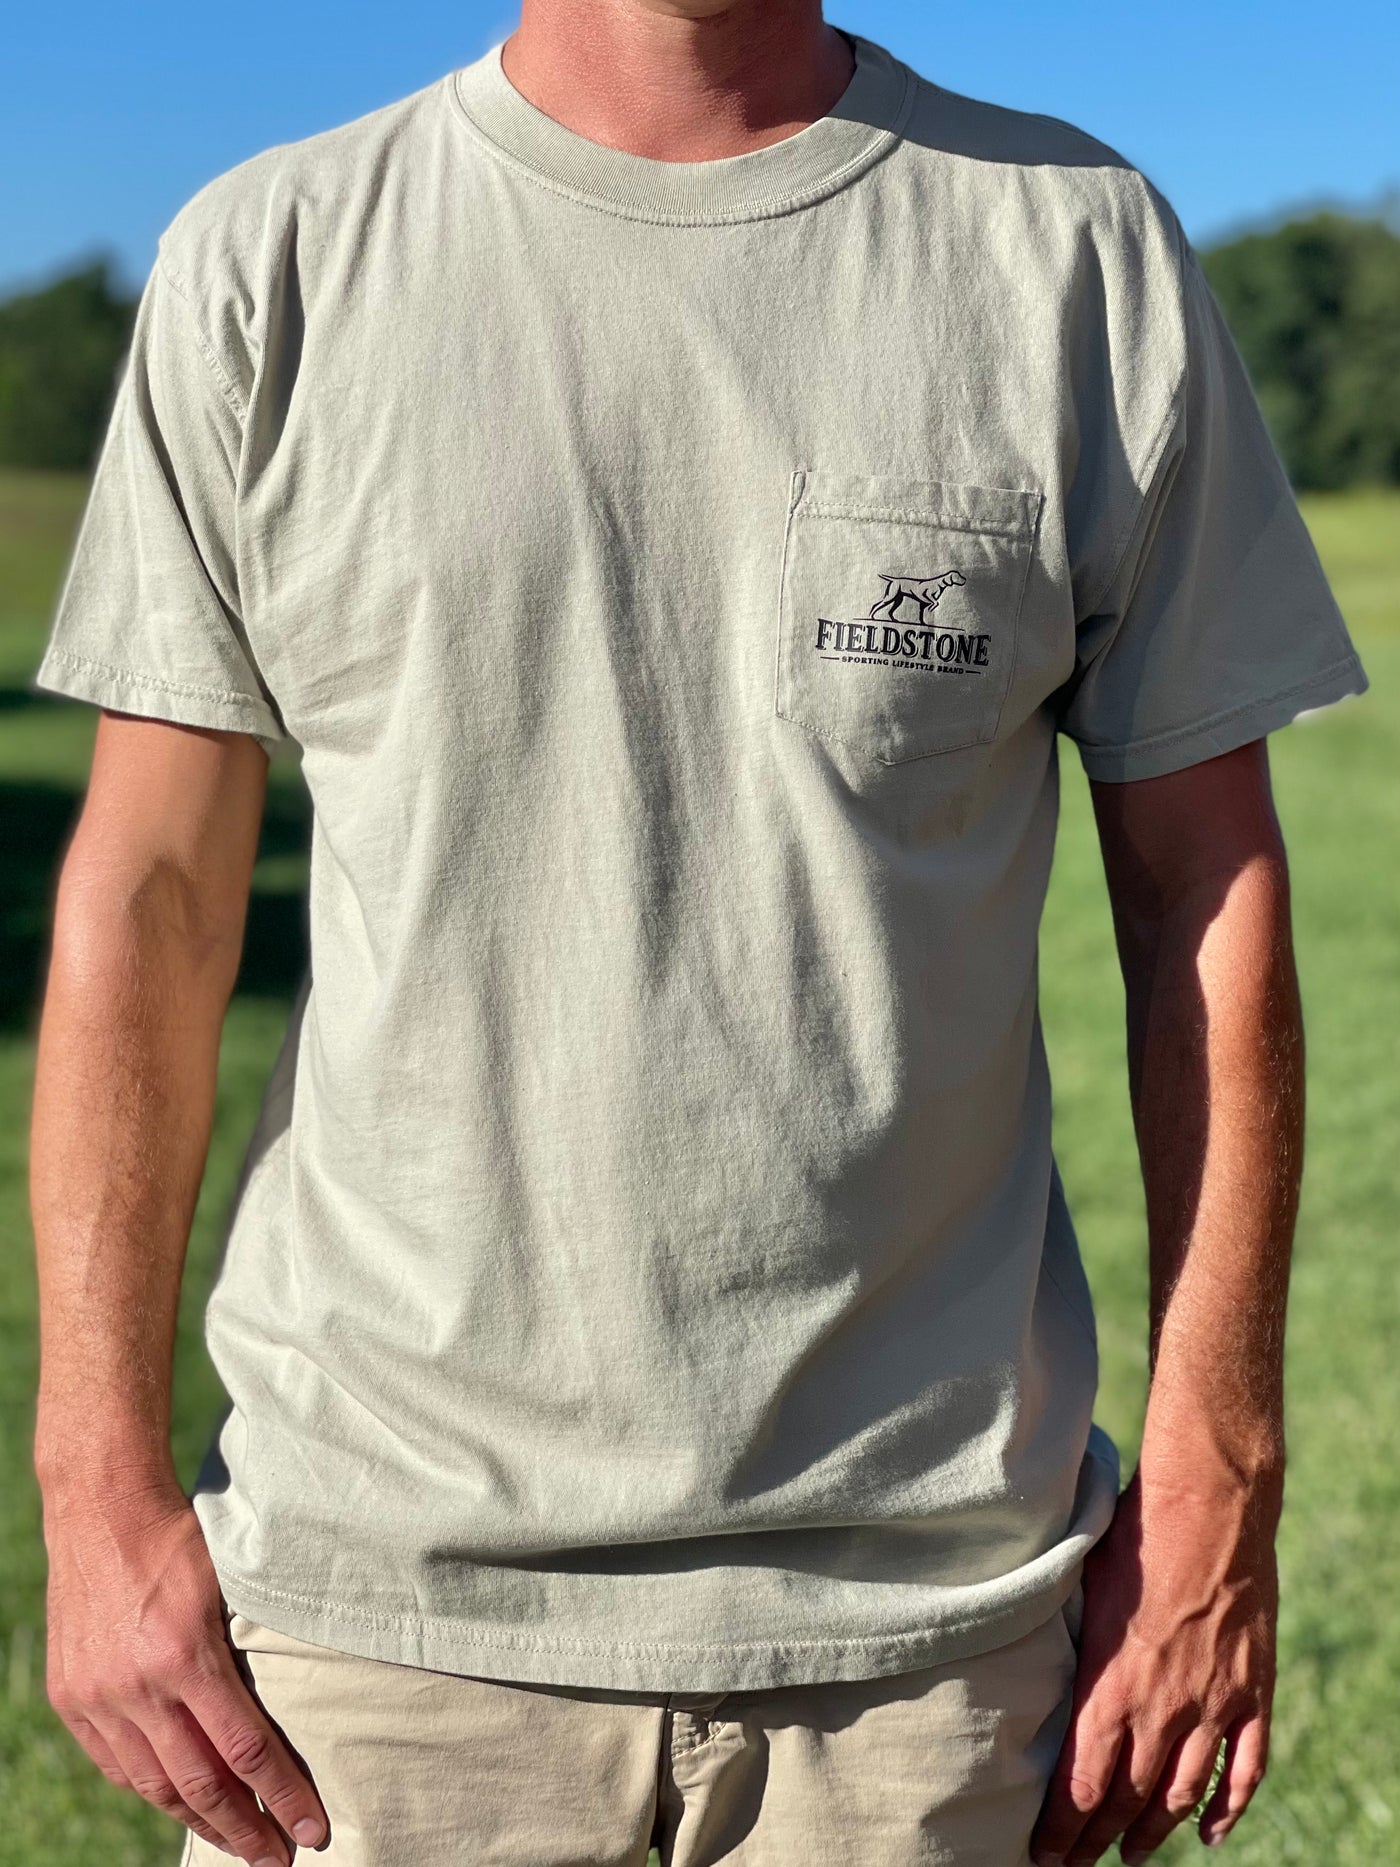 Fieldstone "Retriever Puppy T-Shirt in Sandstone